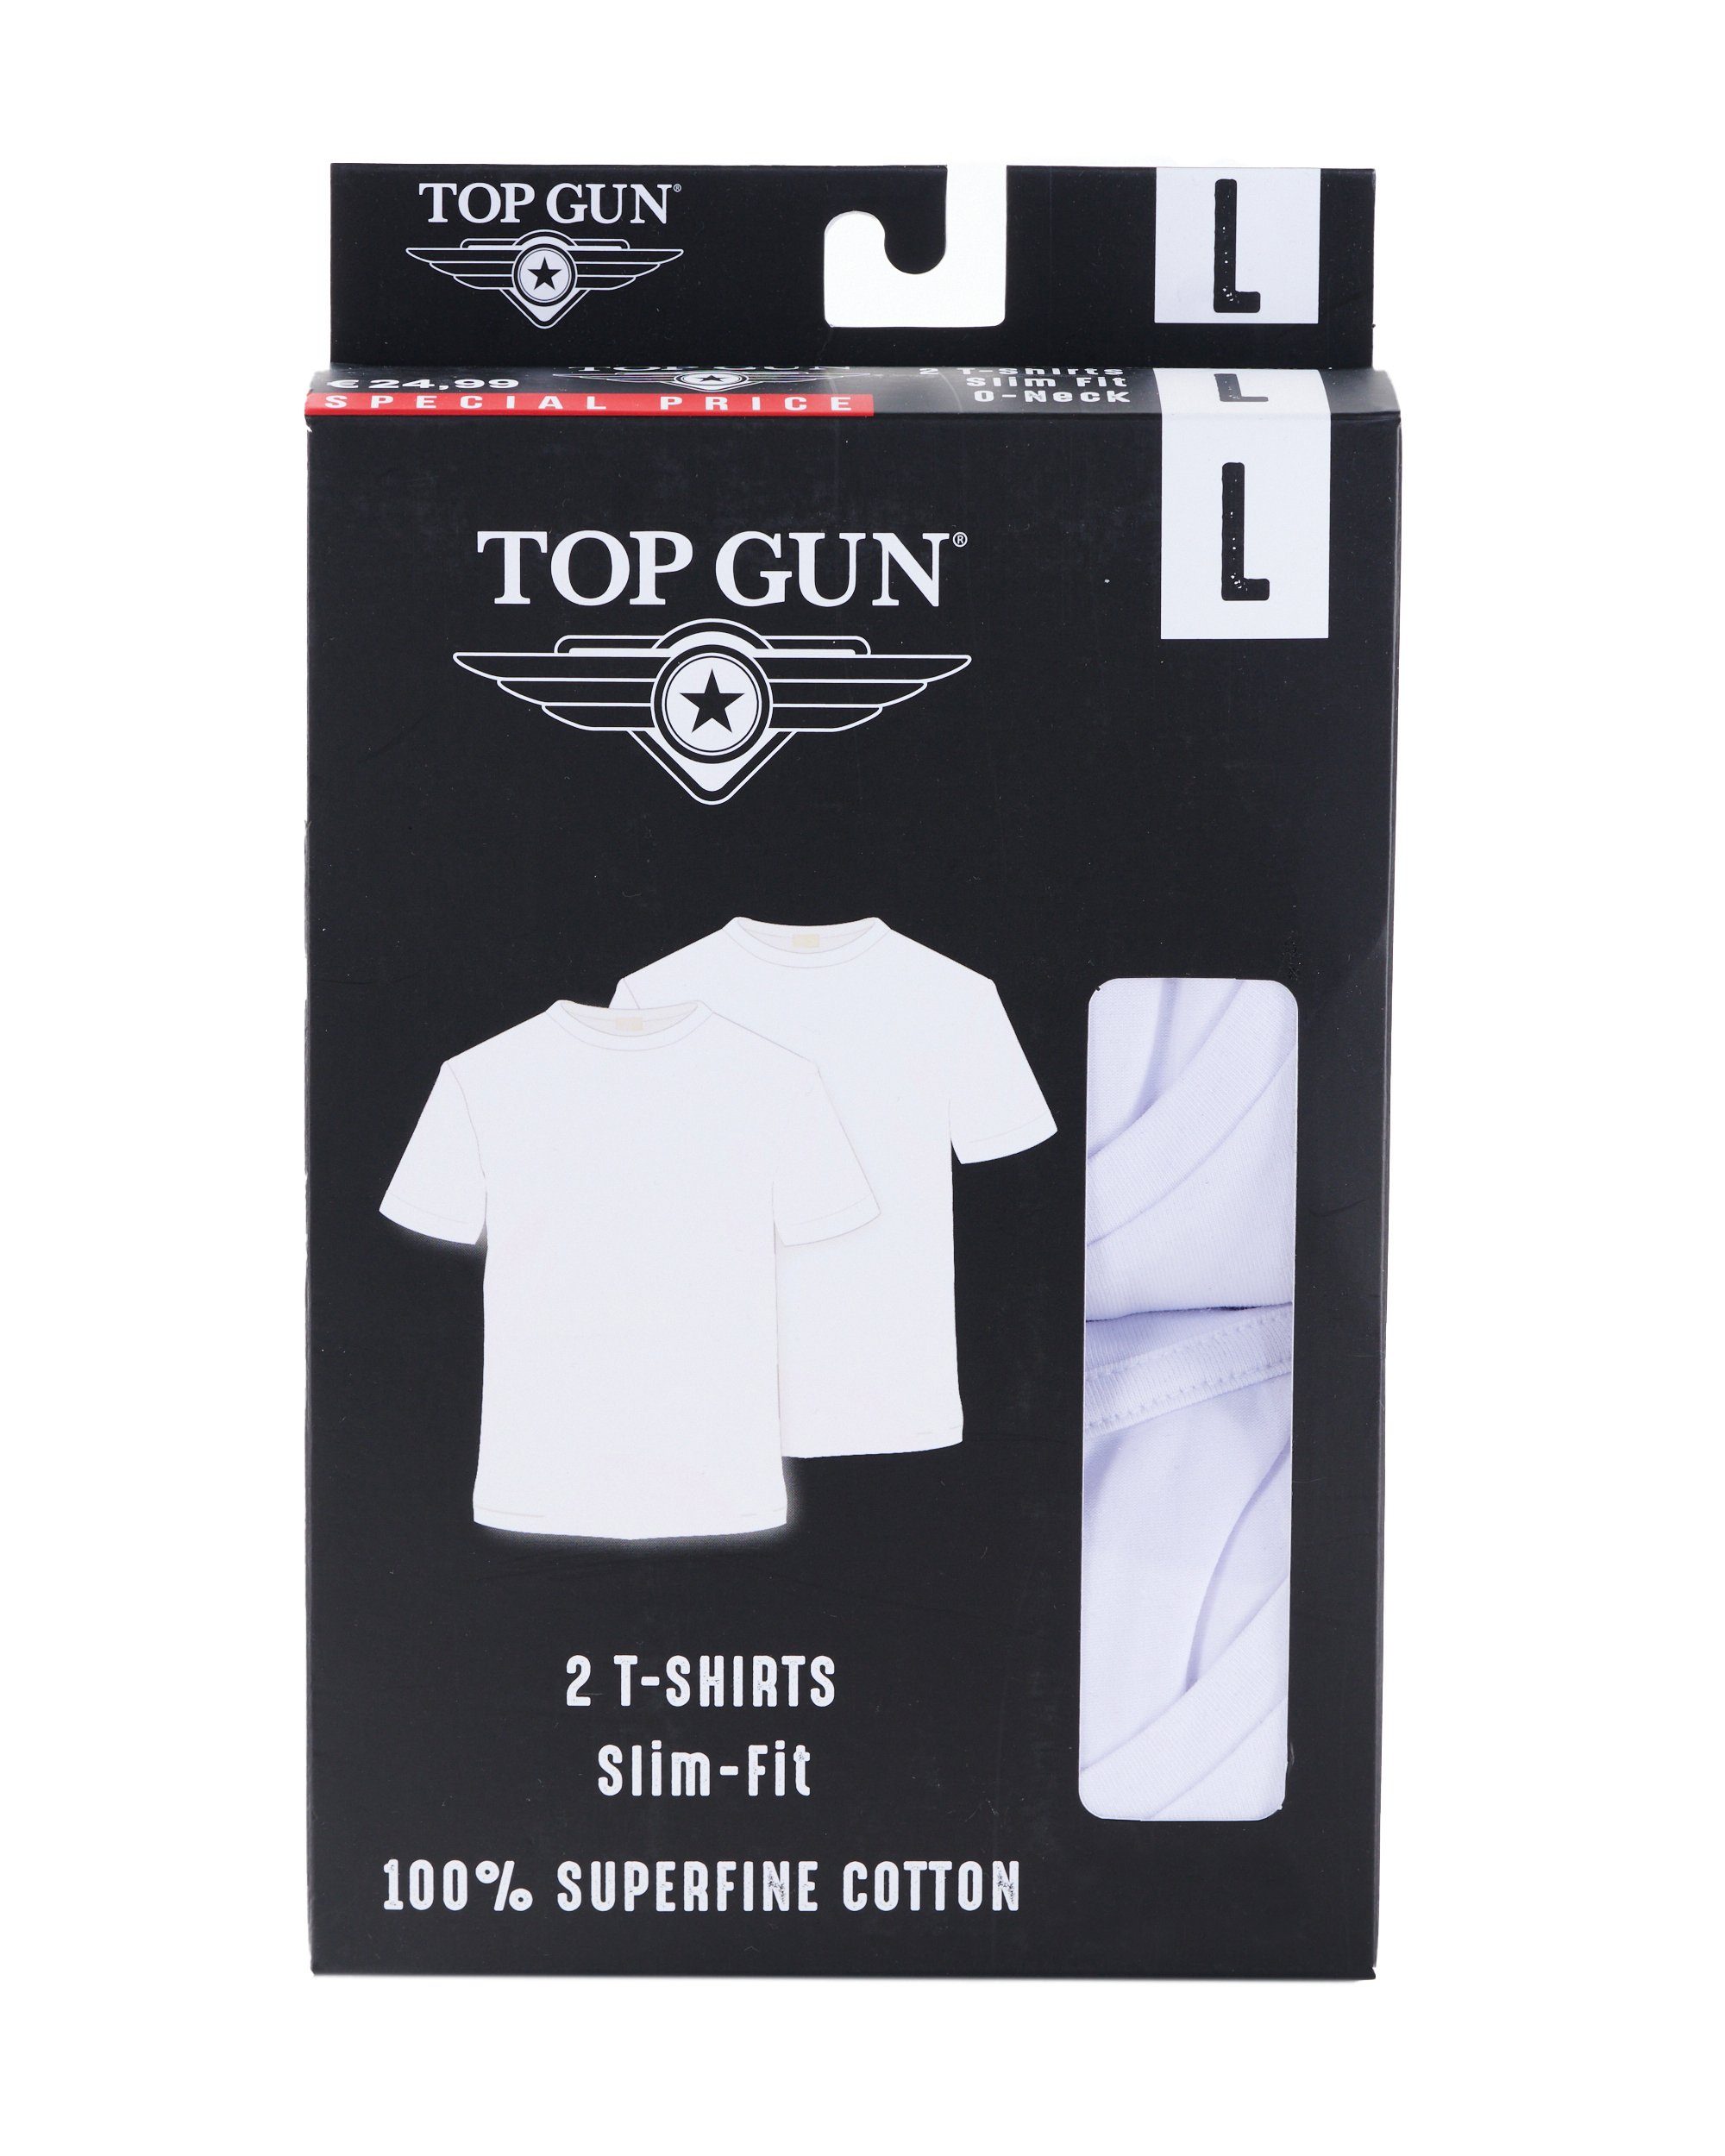 TGUW003 TOP GUN T-Shirt white